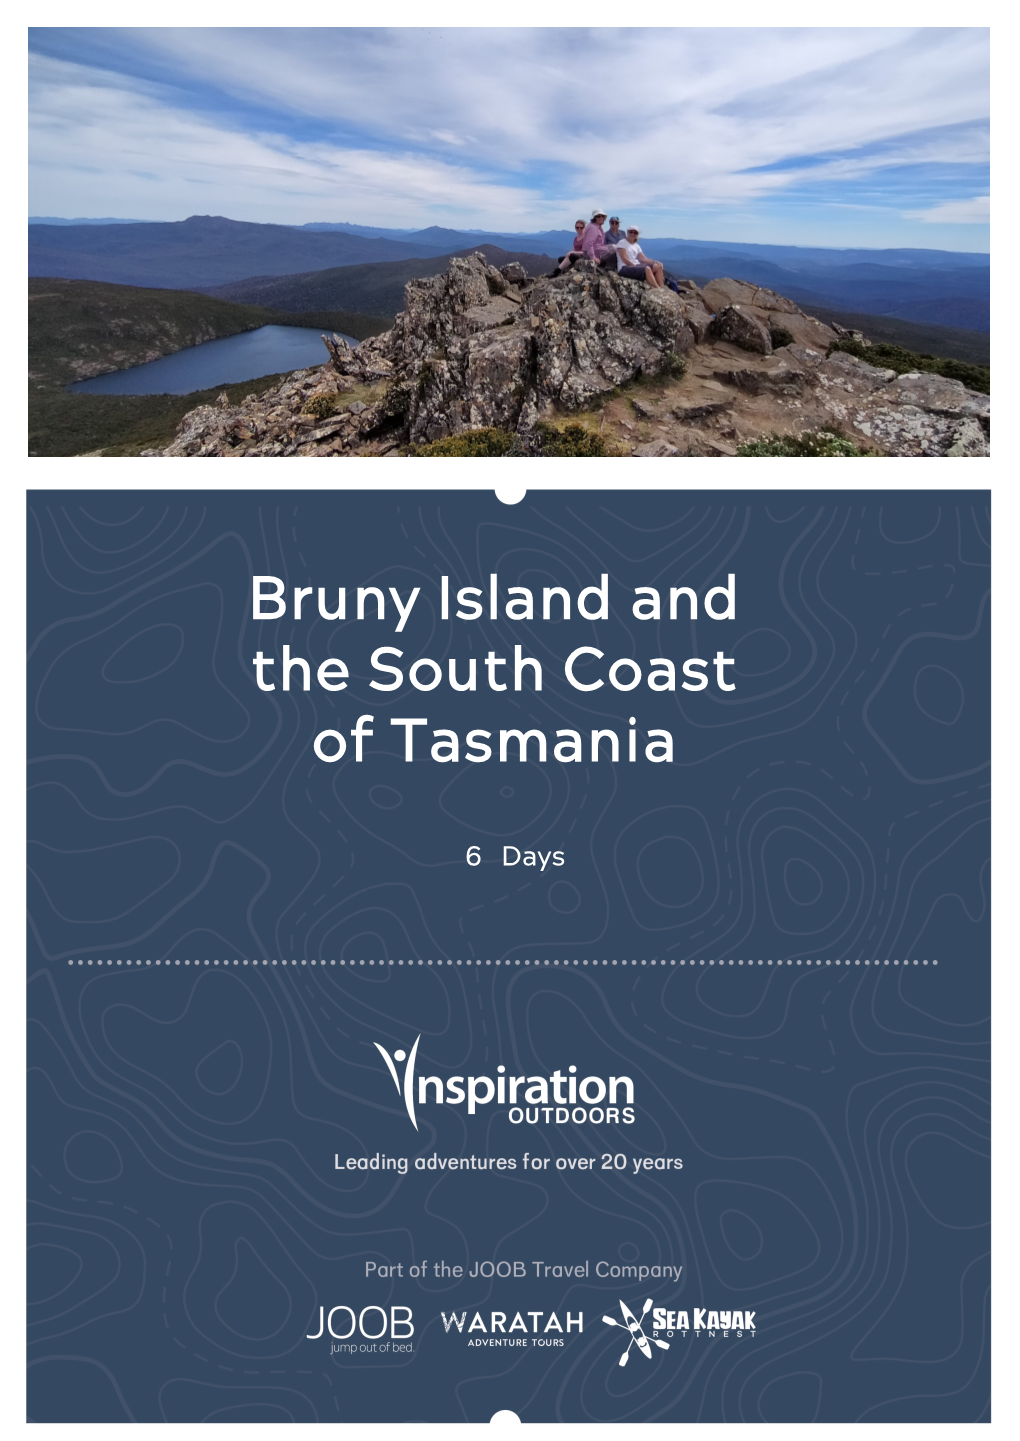 Bruny Island and the South Coast of Tasmania